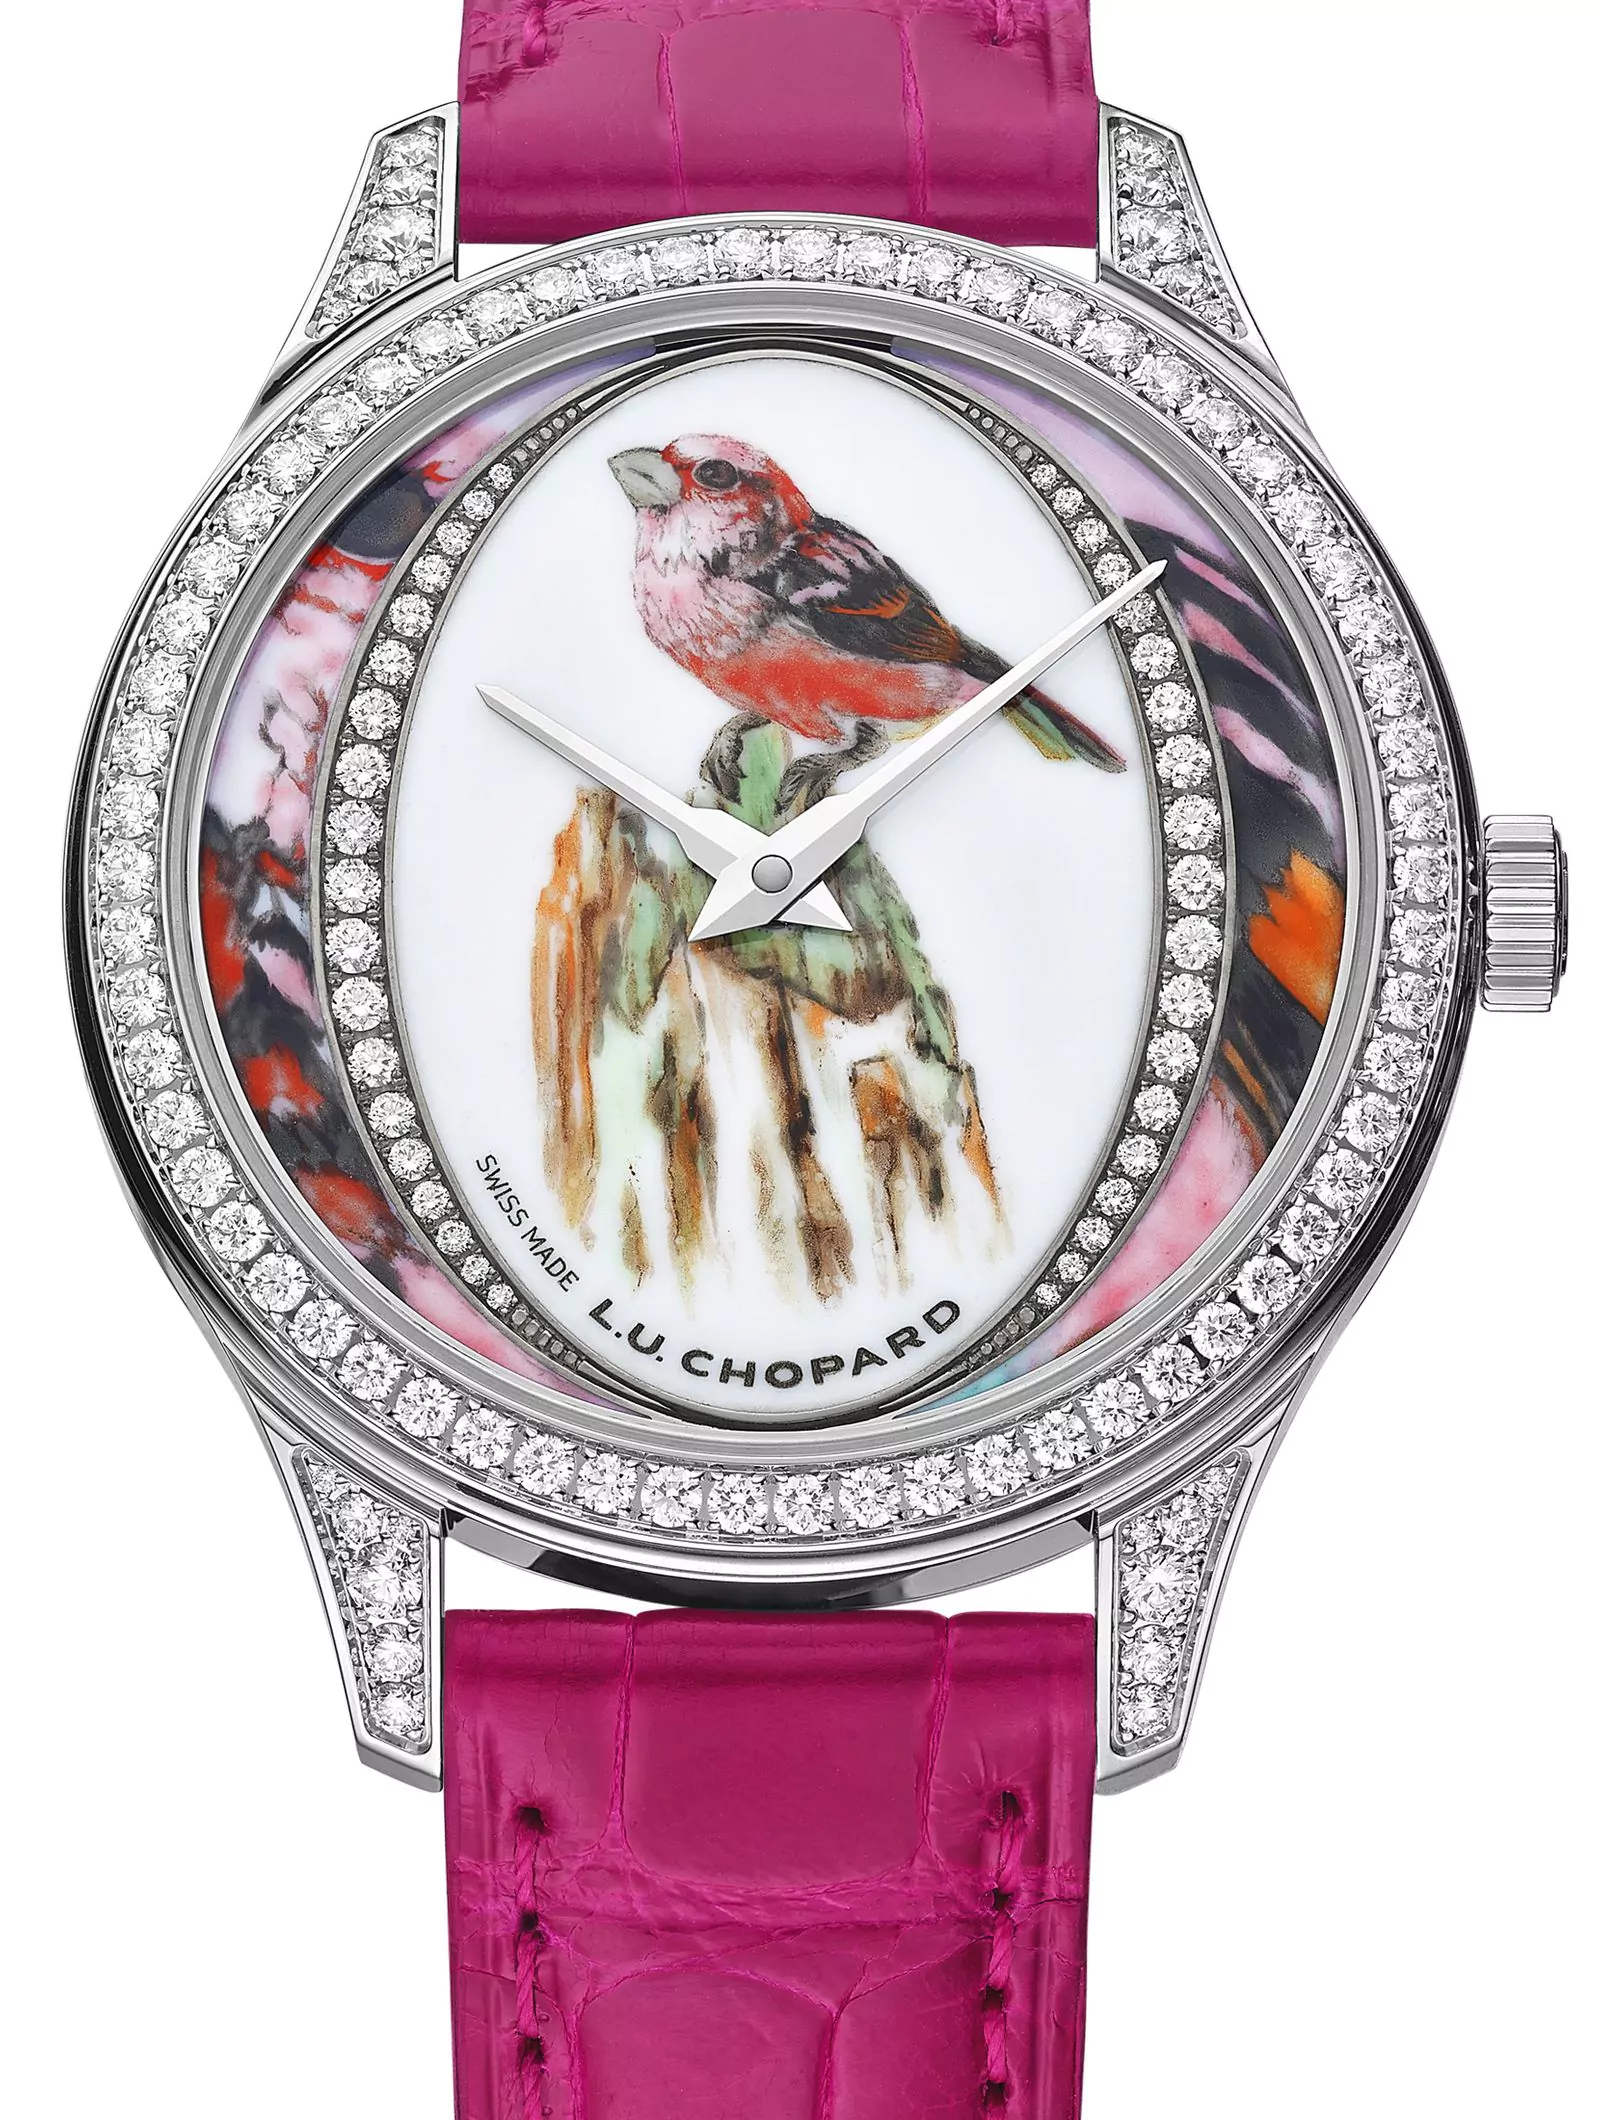 На циферблате часов Chopard L.U.C XP BirdLife поселилась Сибирская чечевица, фото 2